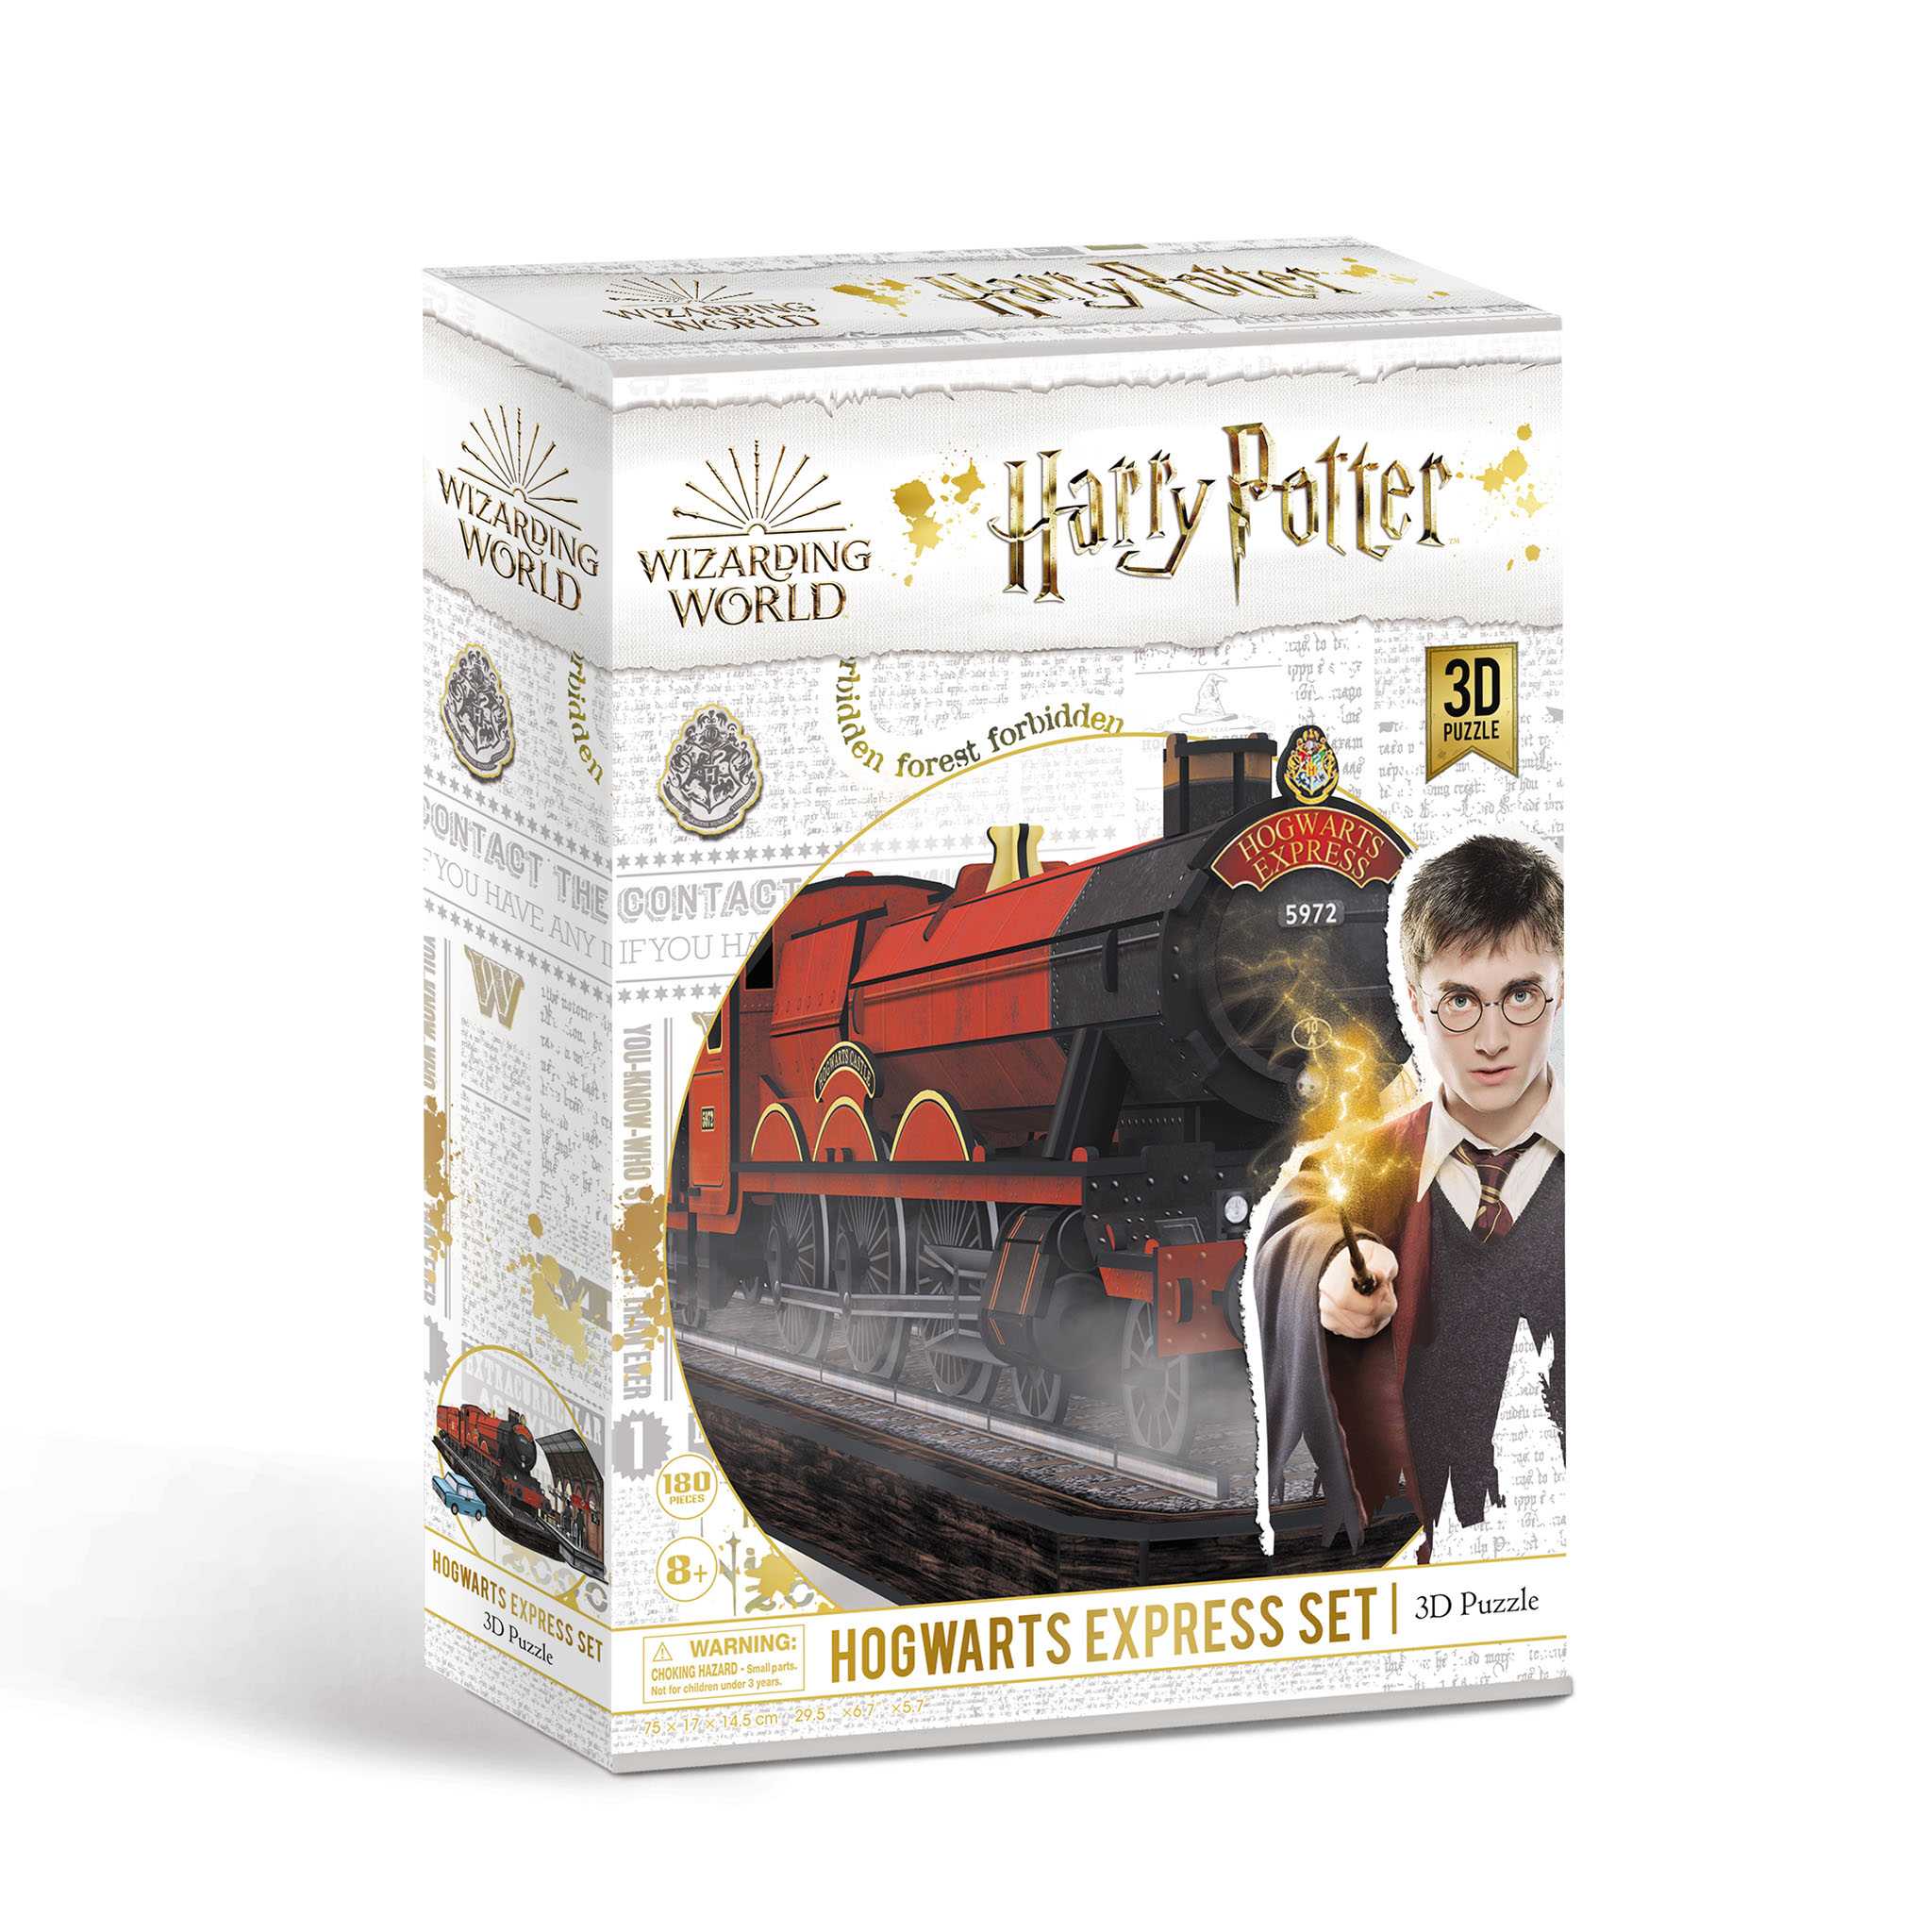 3D PuzzleRevell 00303 - Harry Potter Hogwarts Express Set